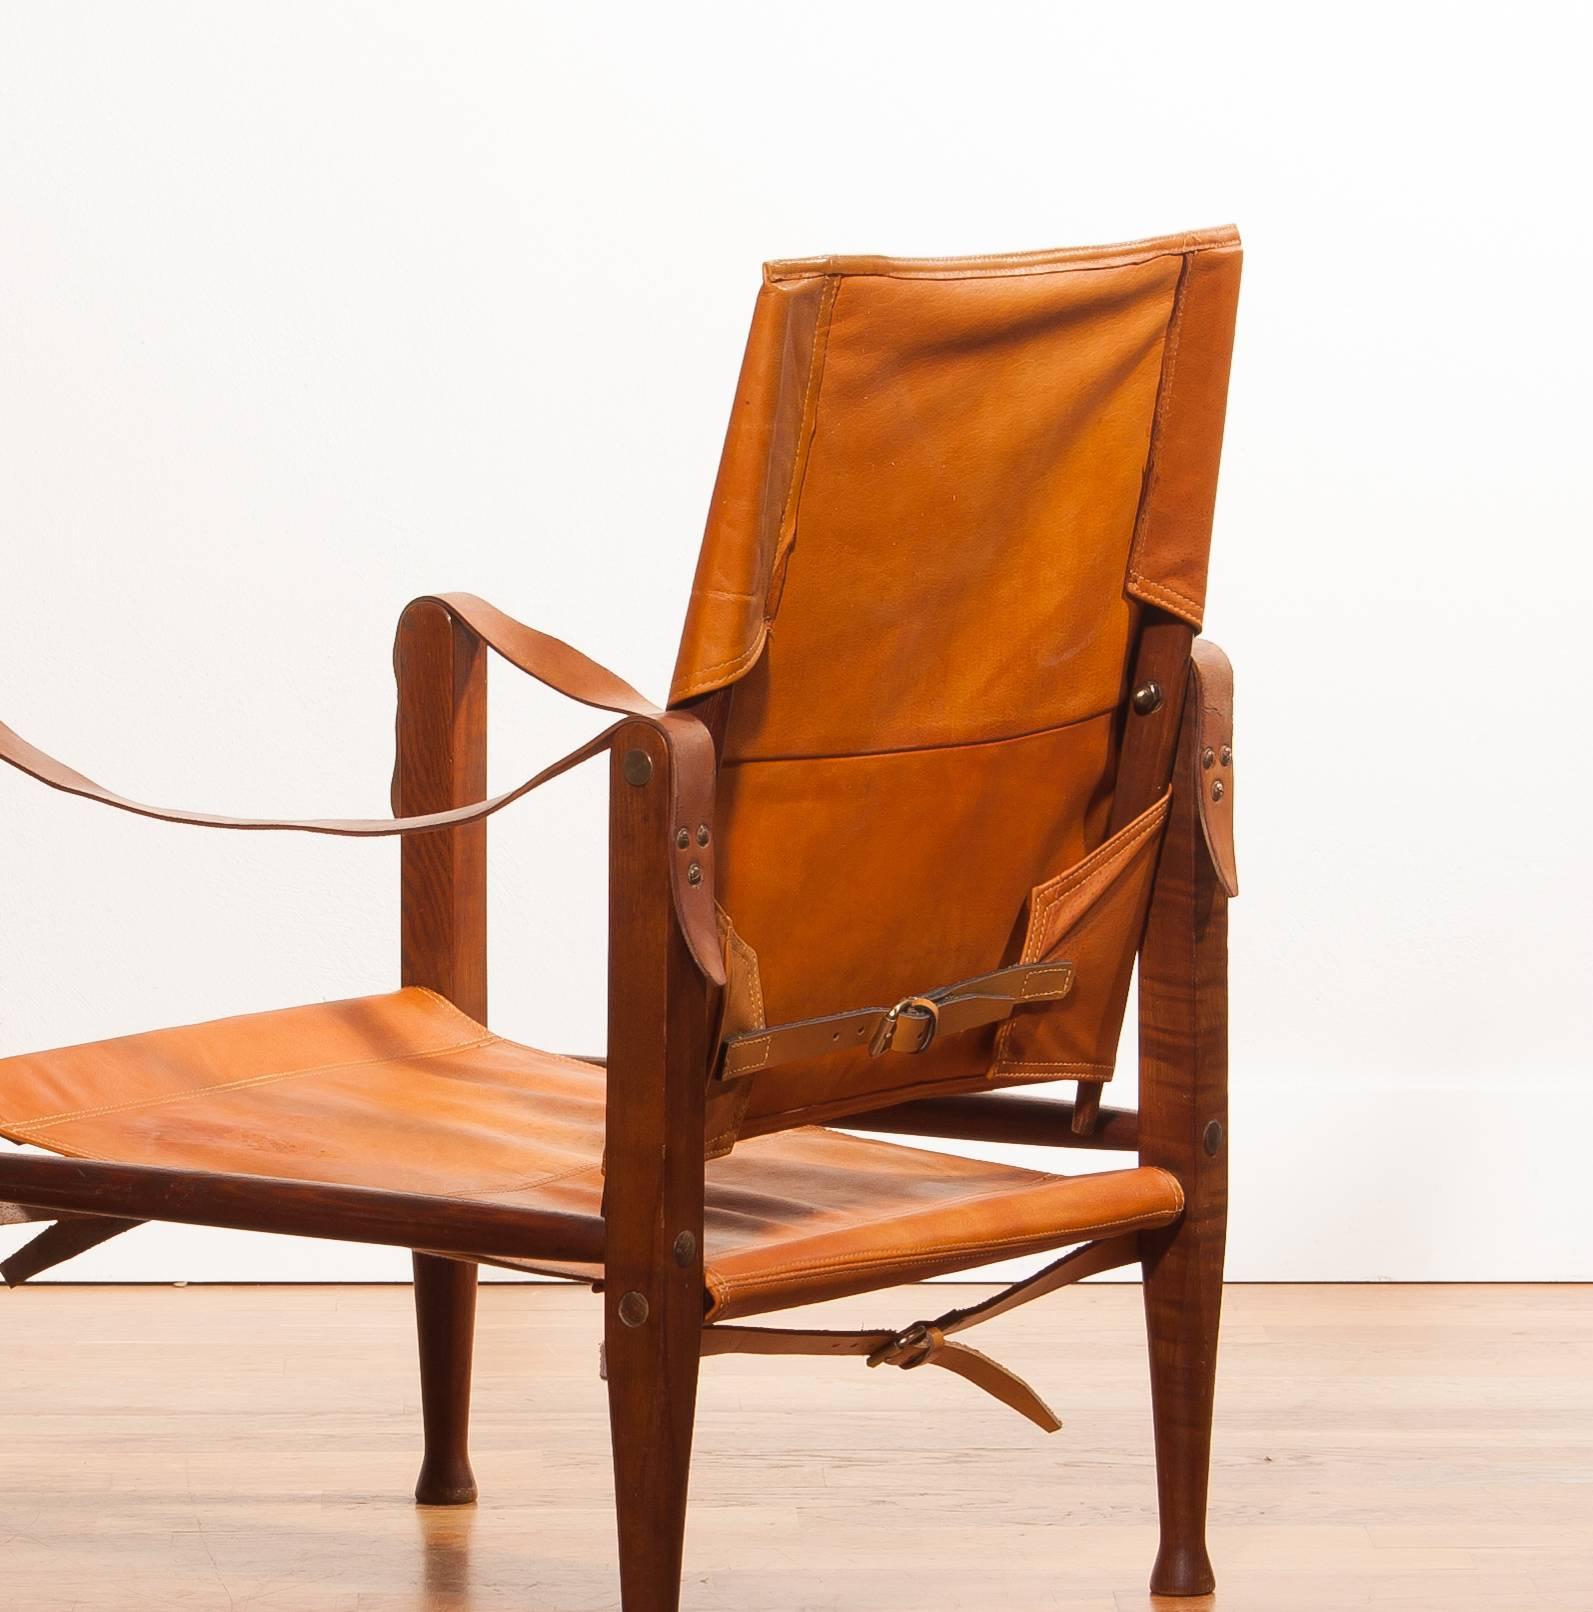 Danish 1930s, Kaare Klint Safari Chair for Rud, Rasmussen